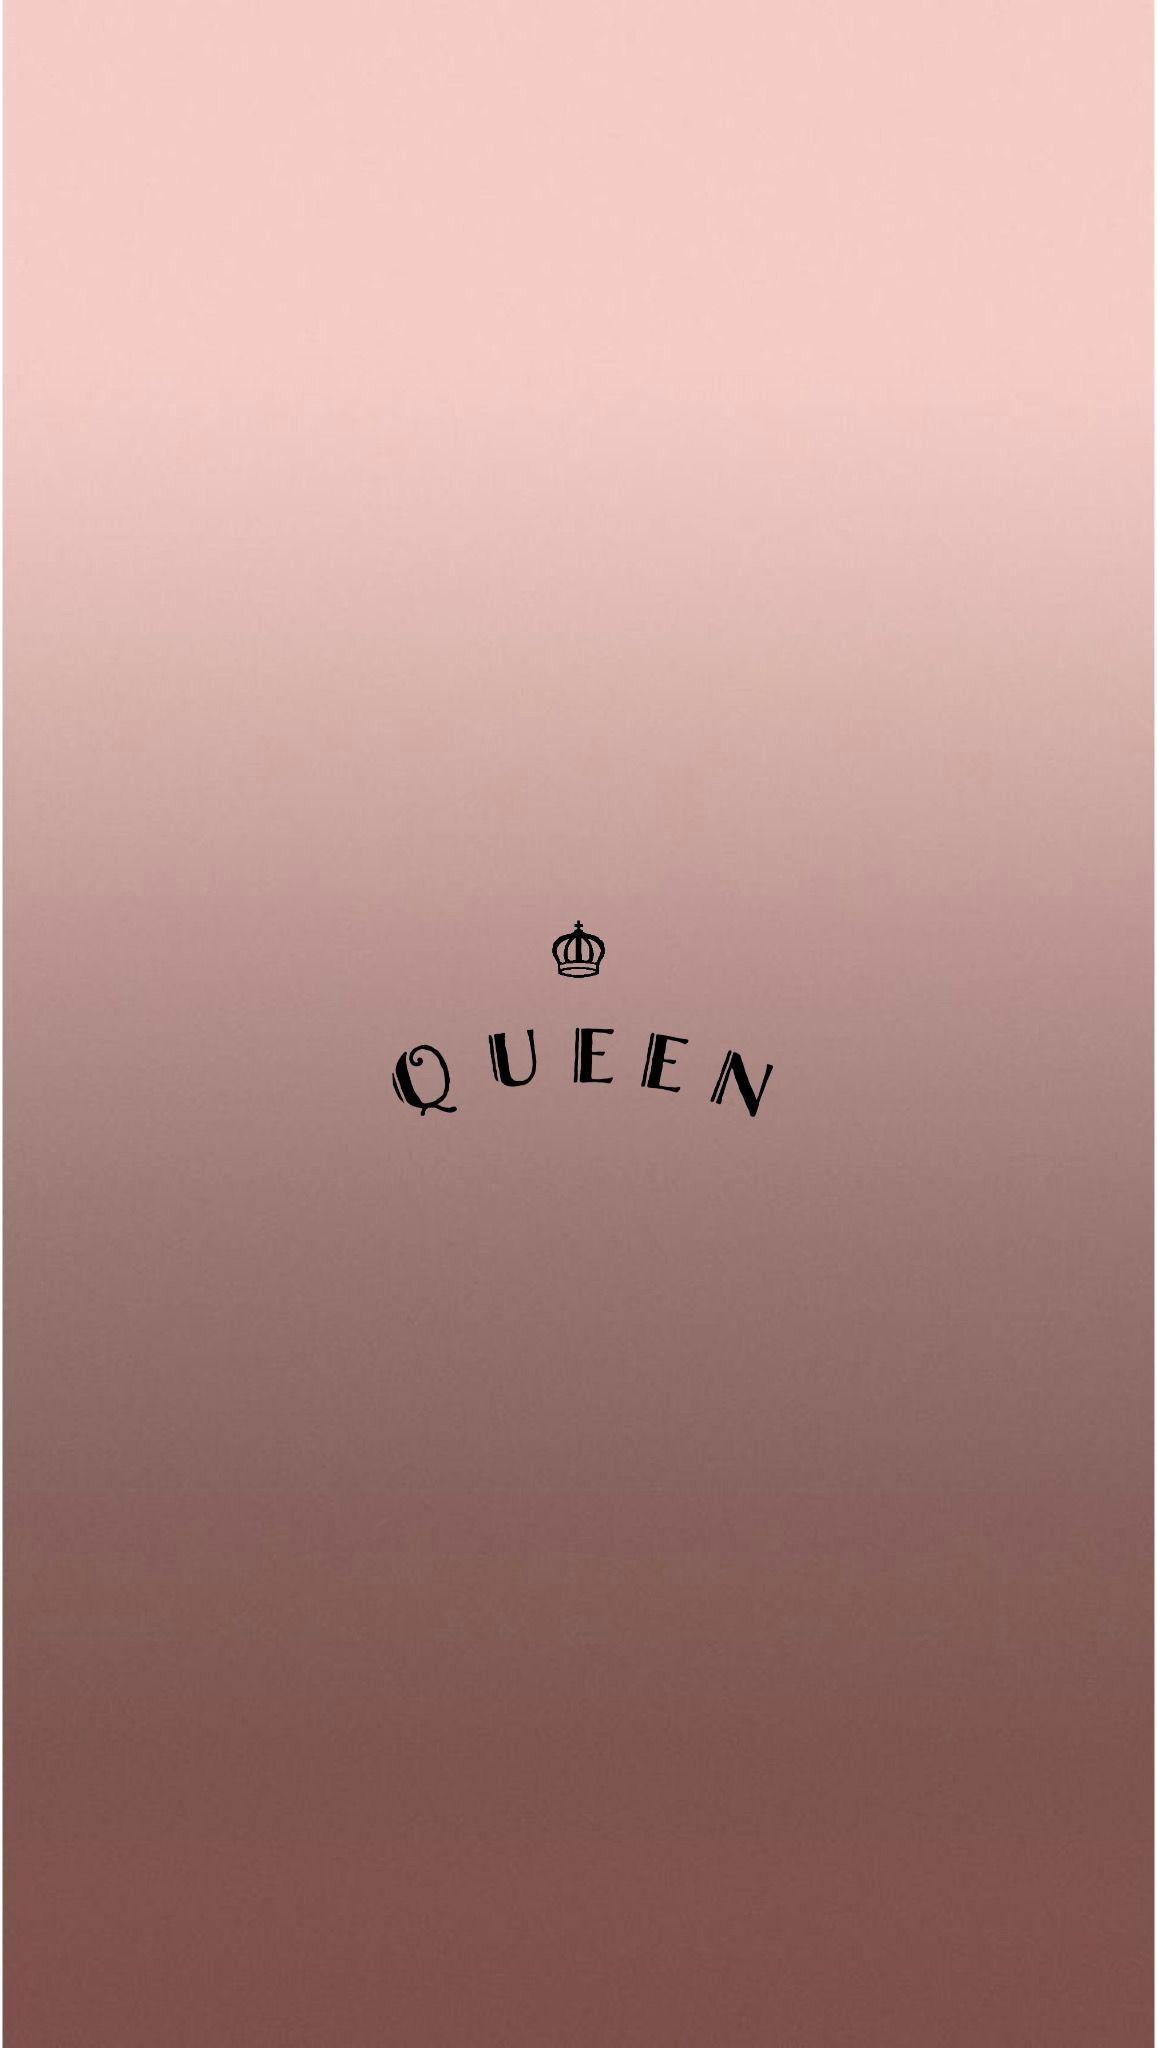 Queen Wallpaper  Apps on Google Play